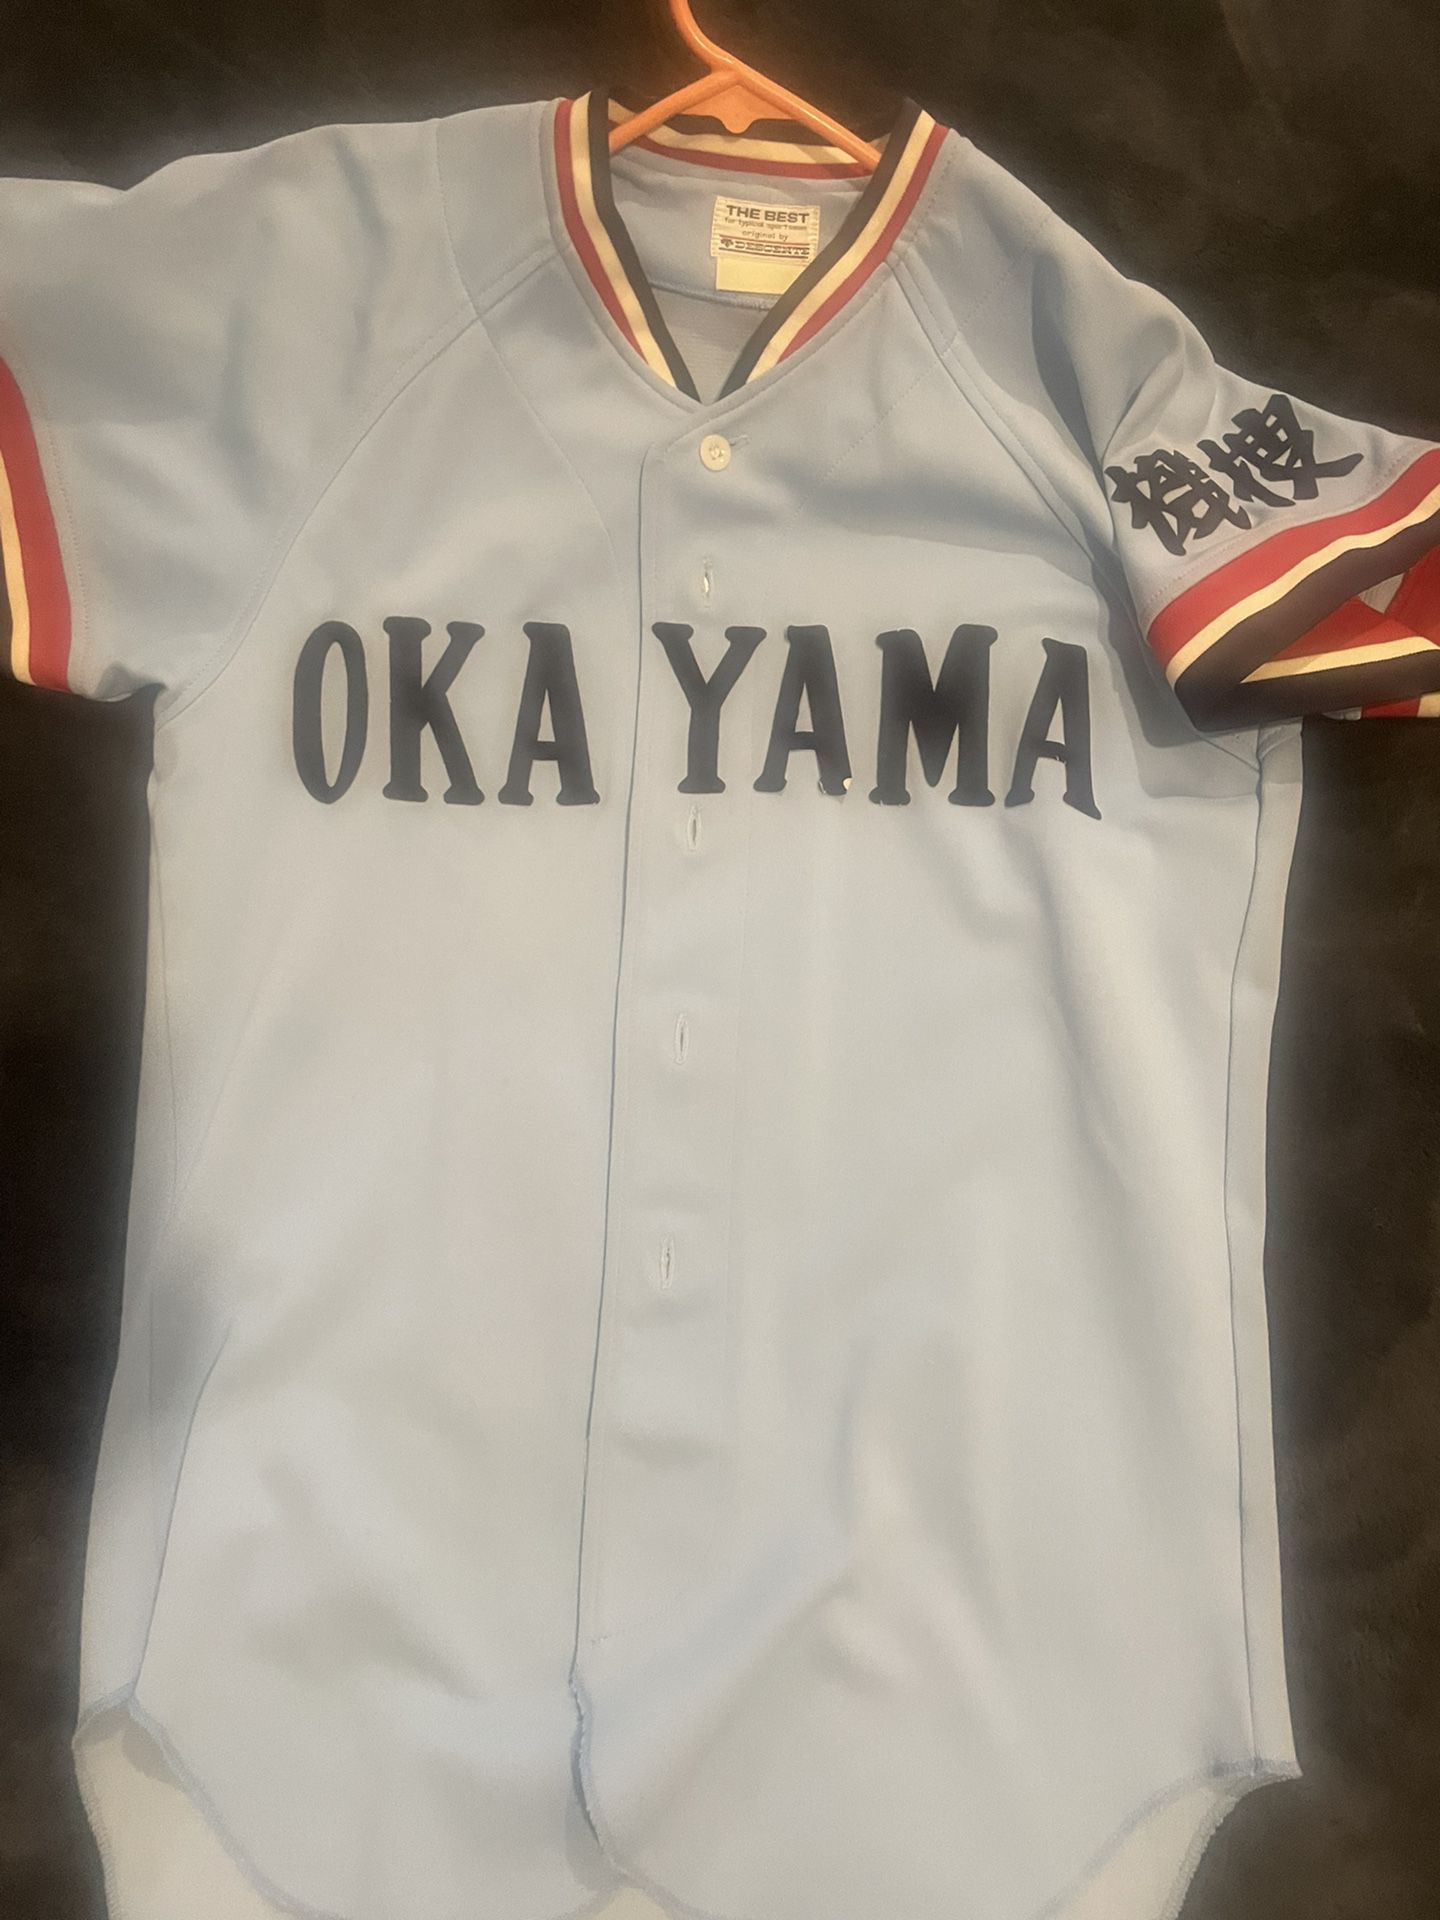 Okayama Japanese Baseball Jersey for Sale in Las Vegas, NV - OfferUp